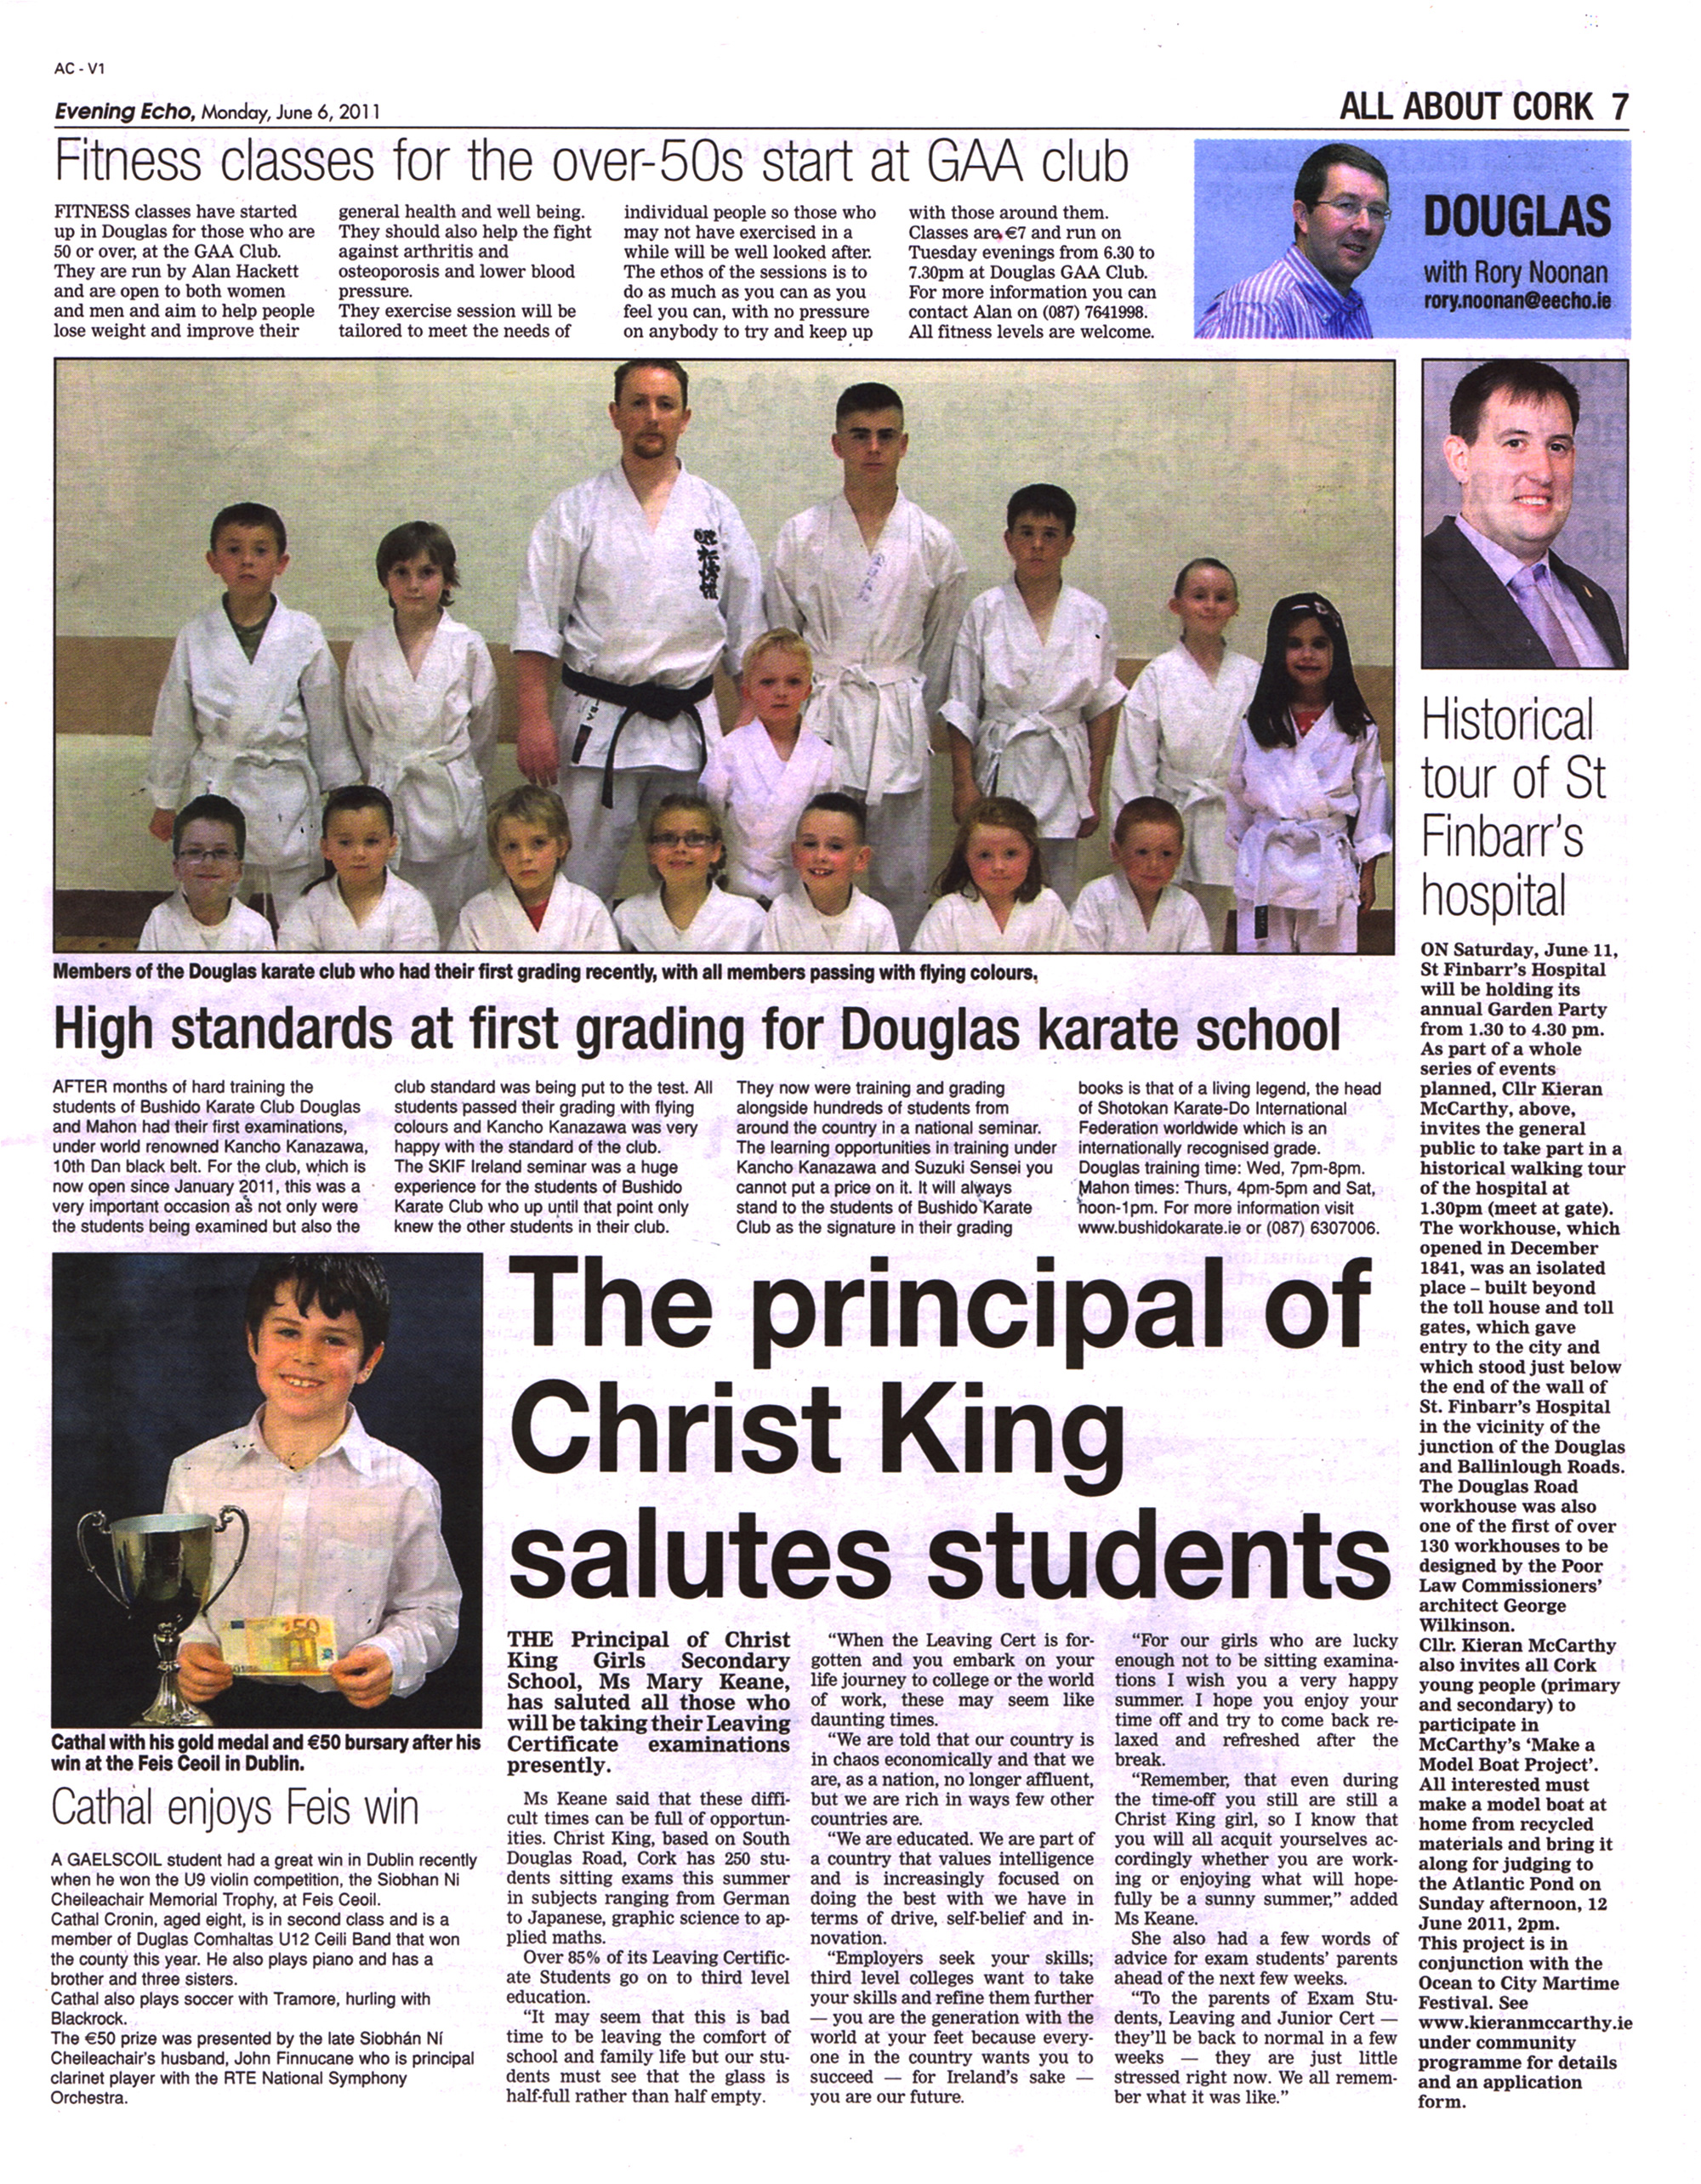 Evening Echo Feature - High standards at first grading for Douglas karate school